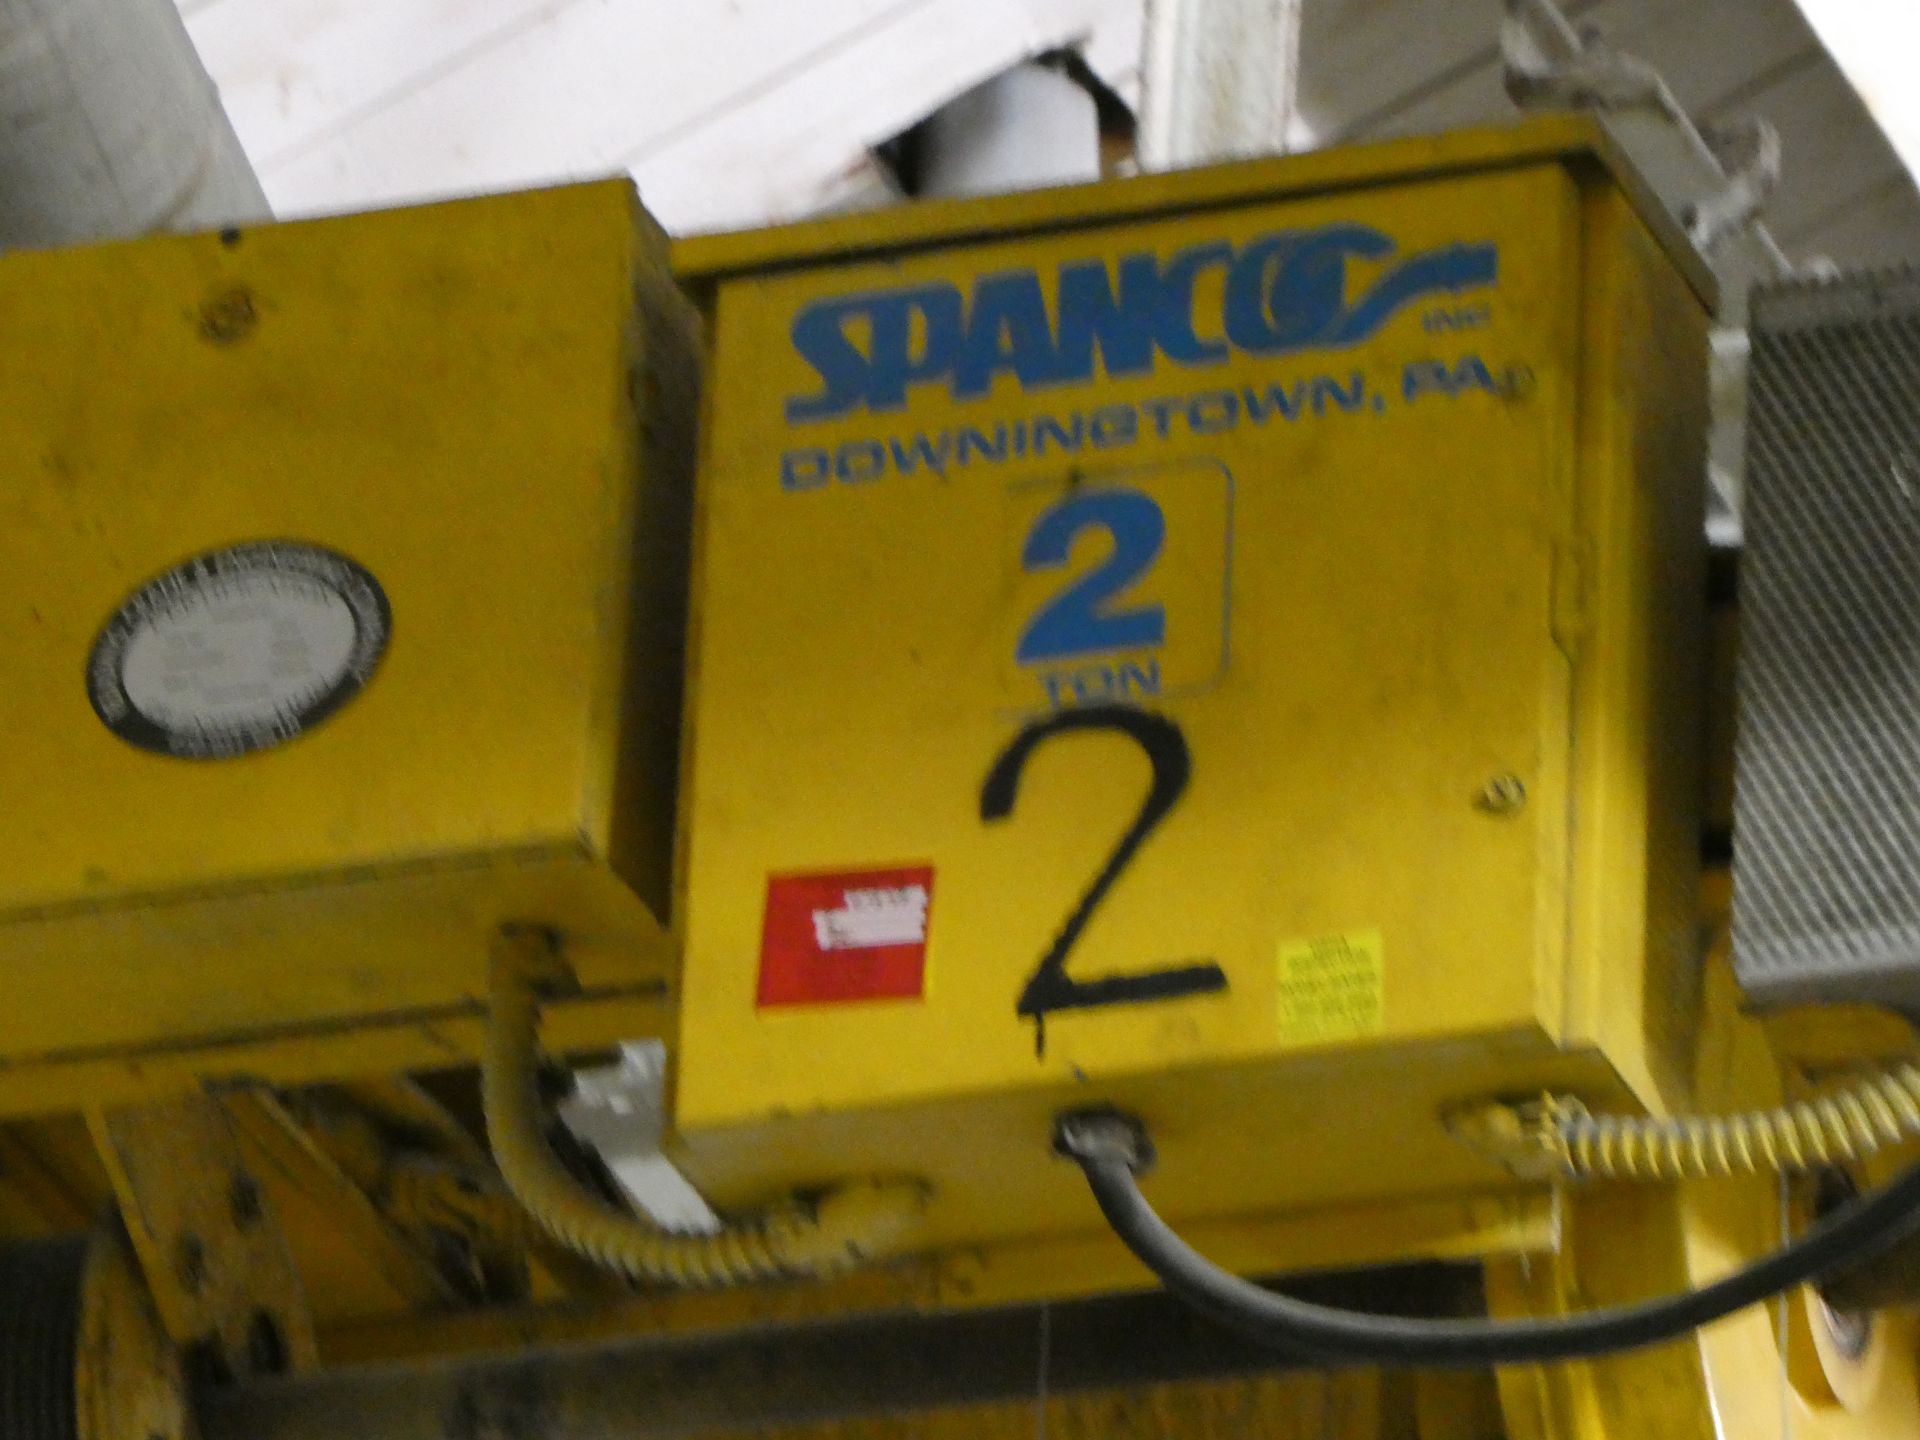 Spanco Overhead Crane System - Image 2 of 4